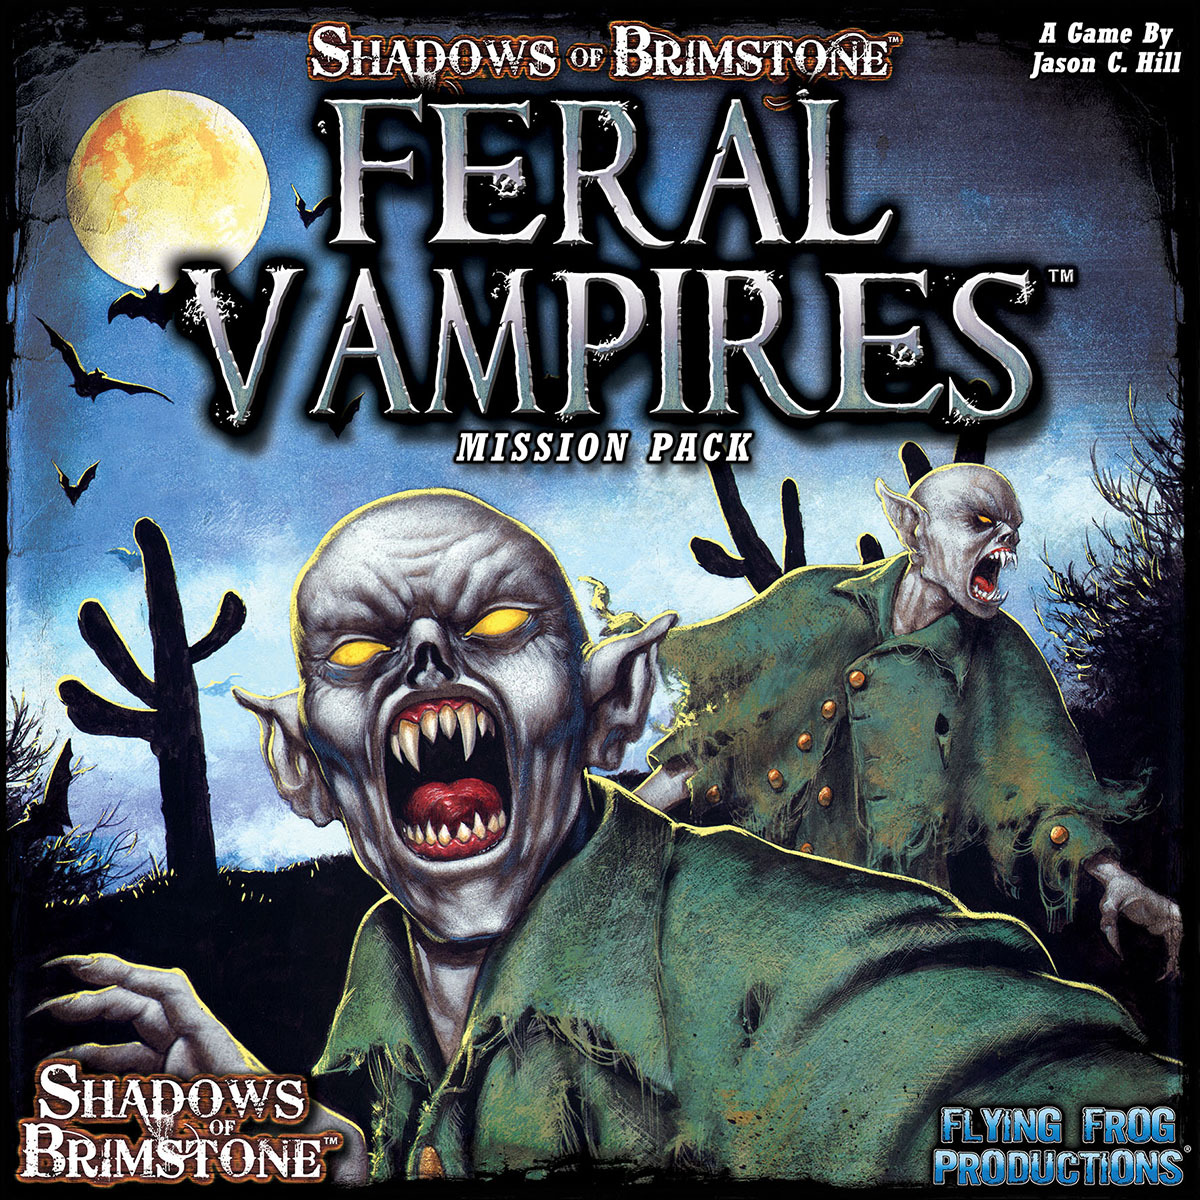 Shadows of Brimstone Ferral Vampires